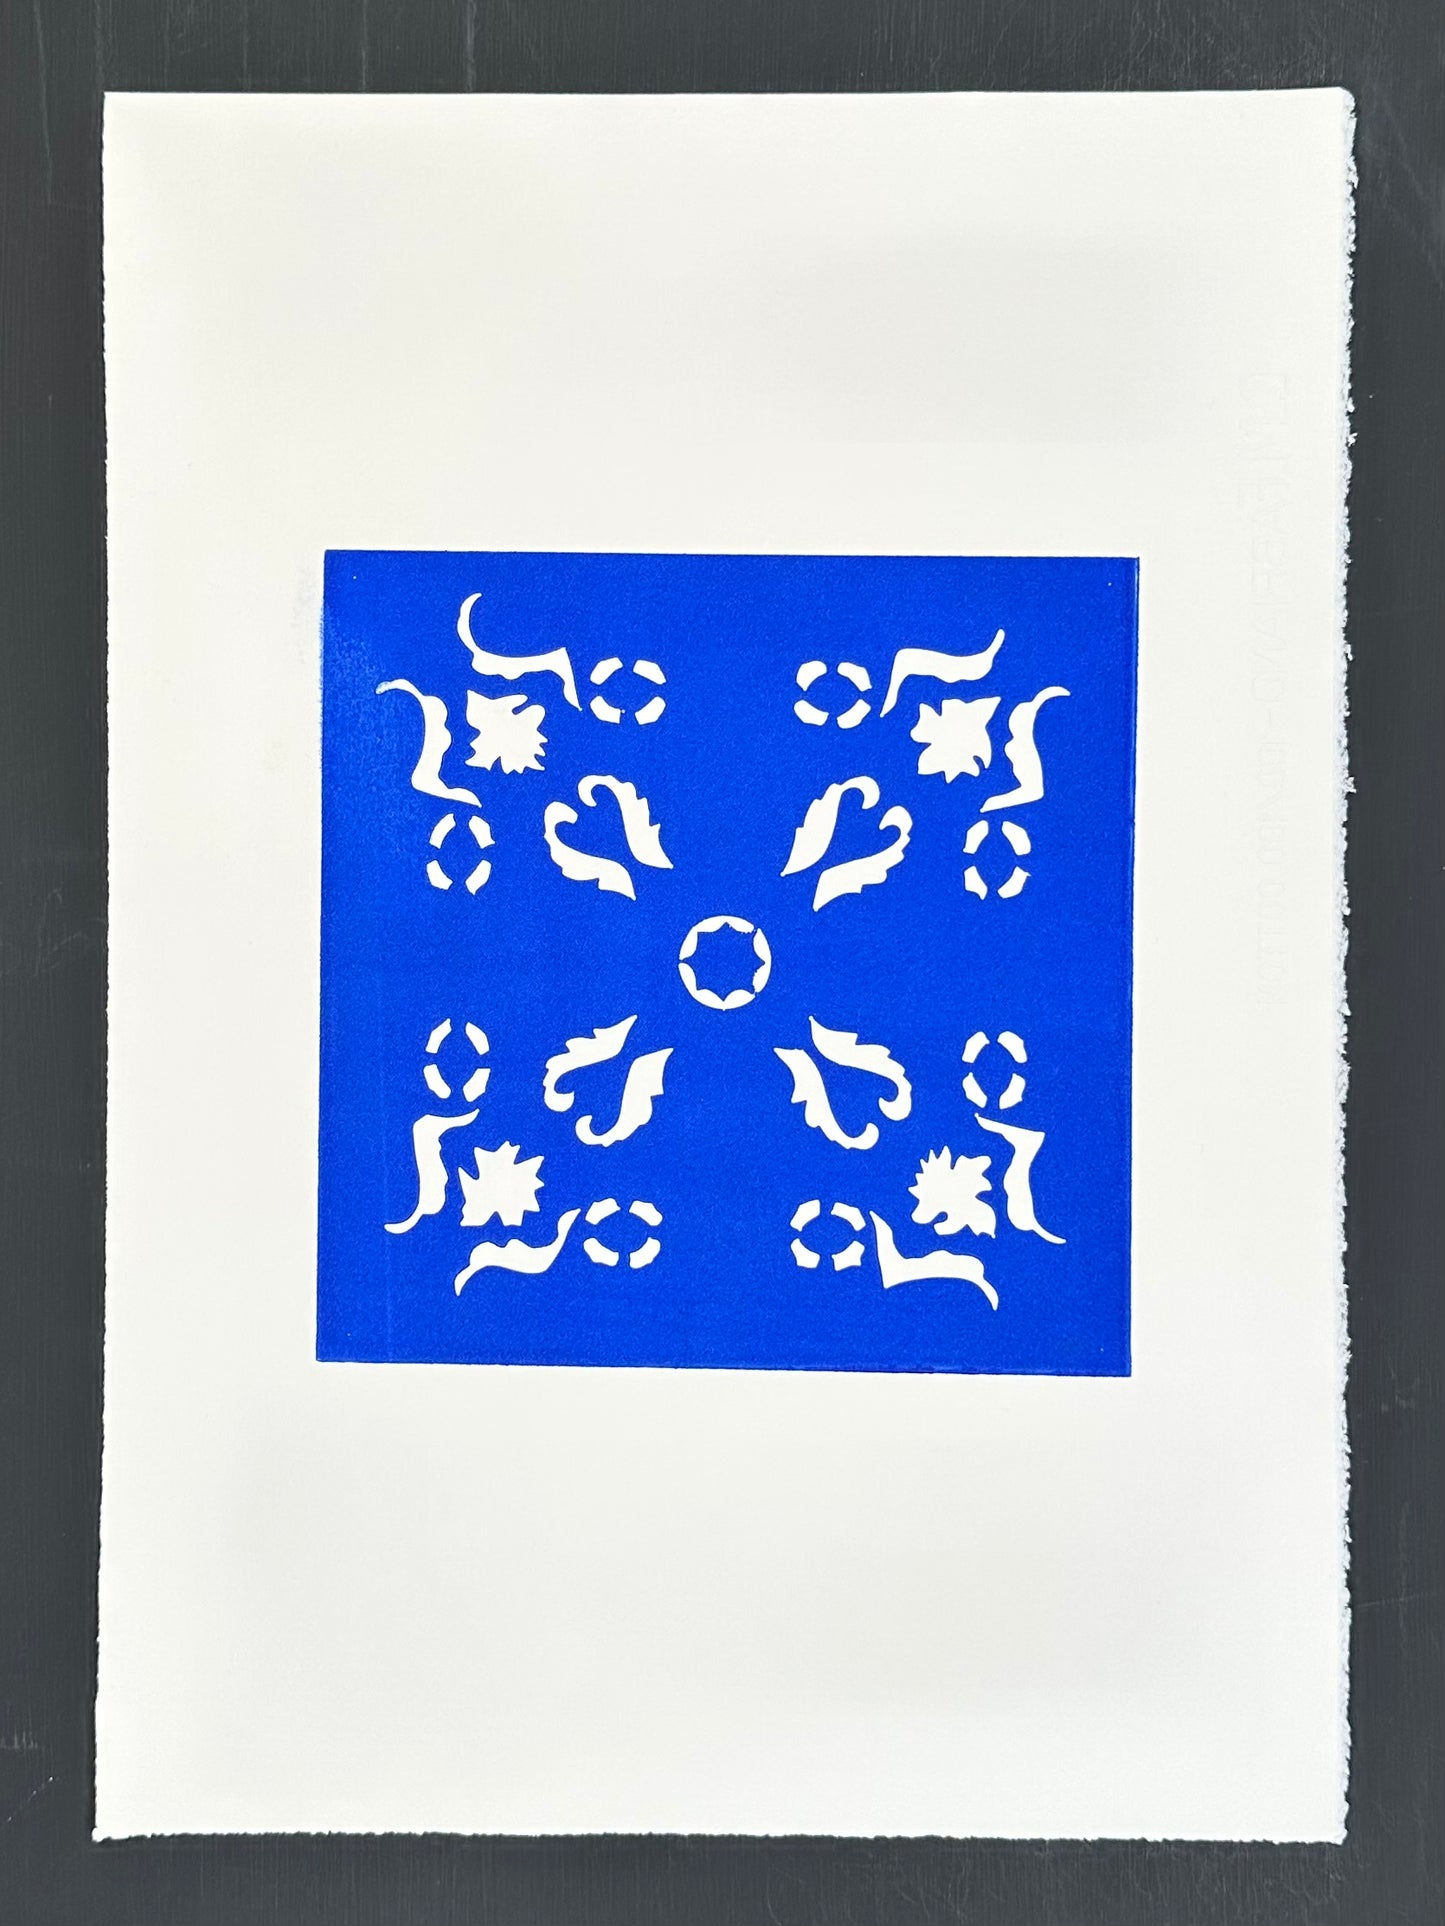 Stencil #4 in Blue